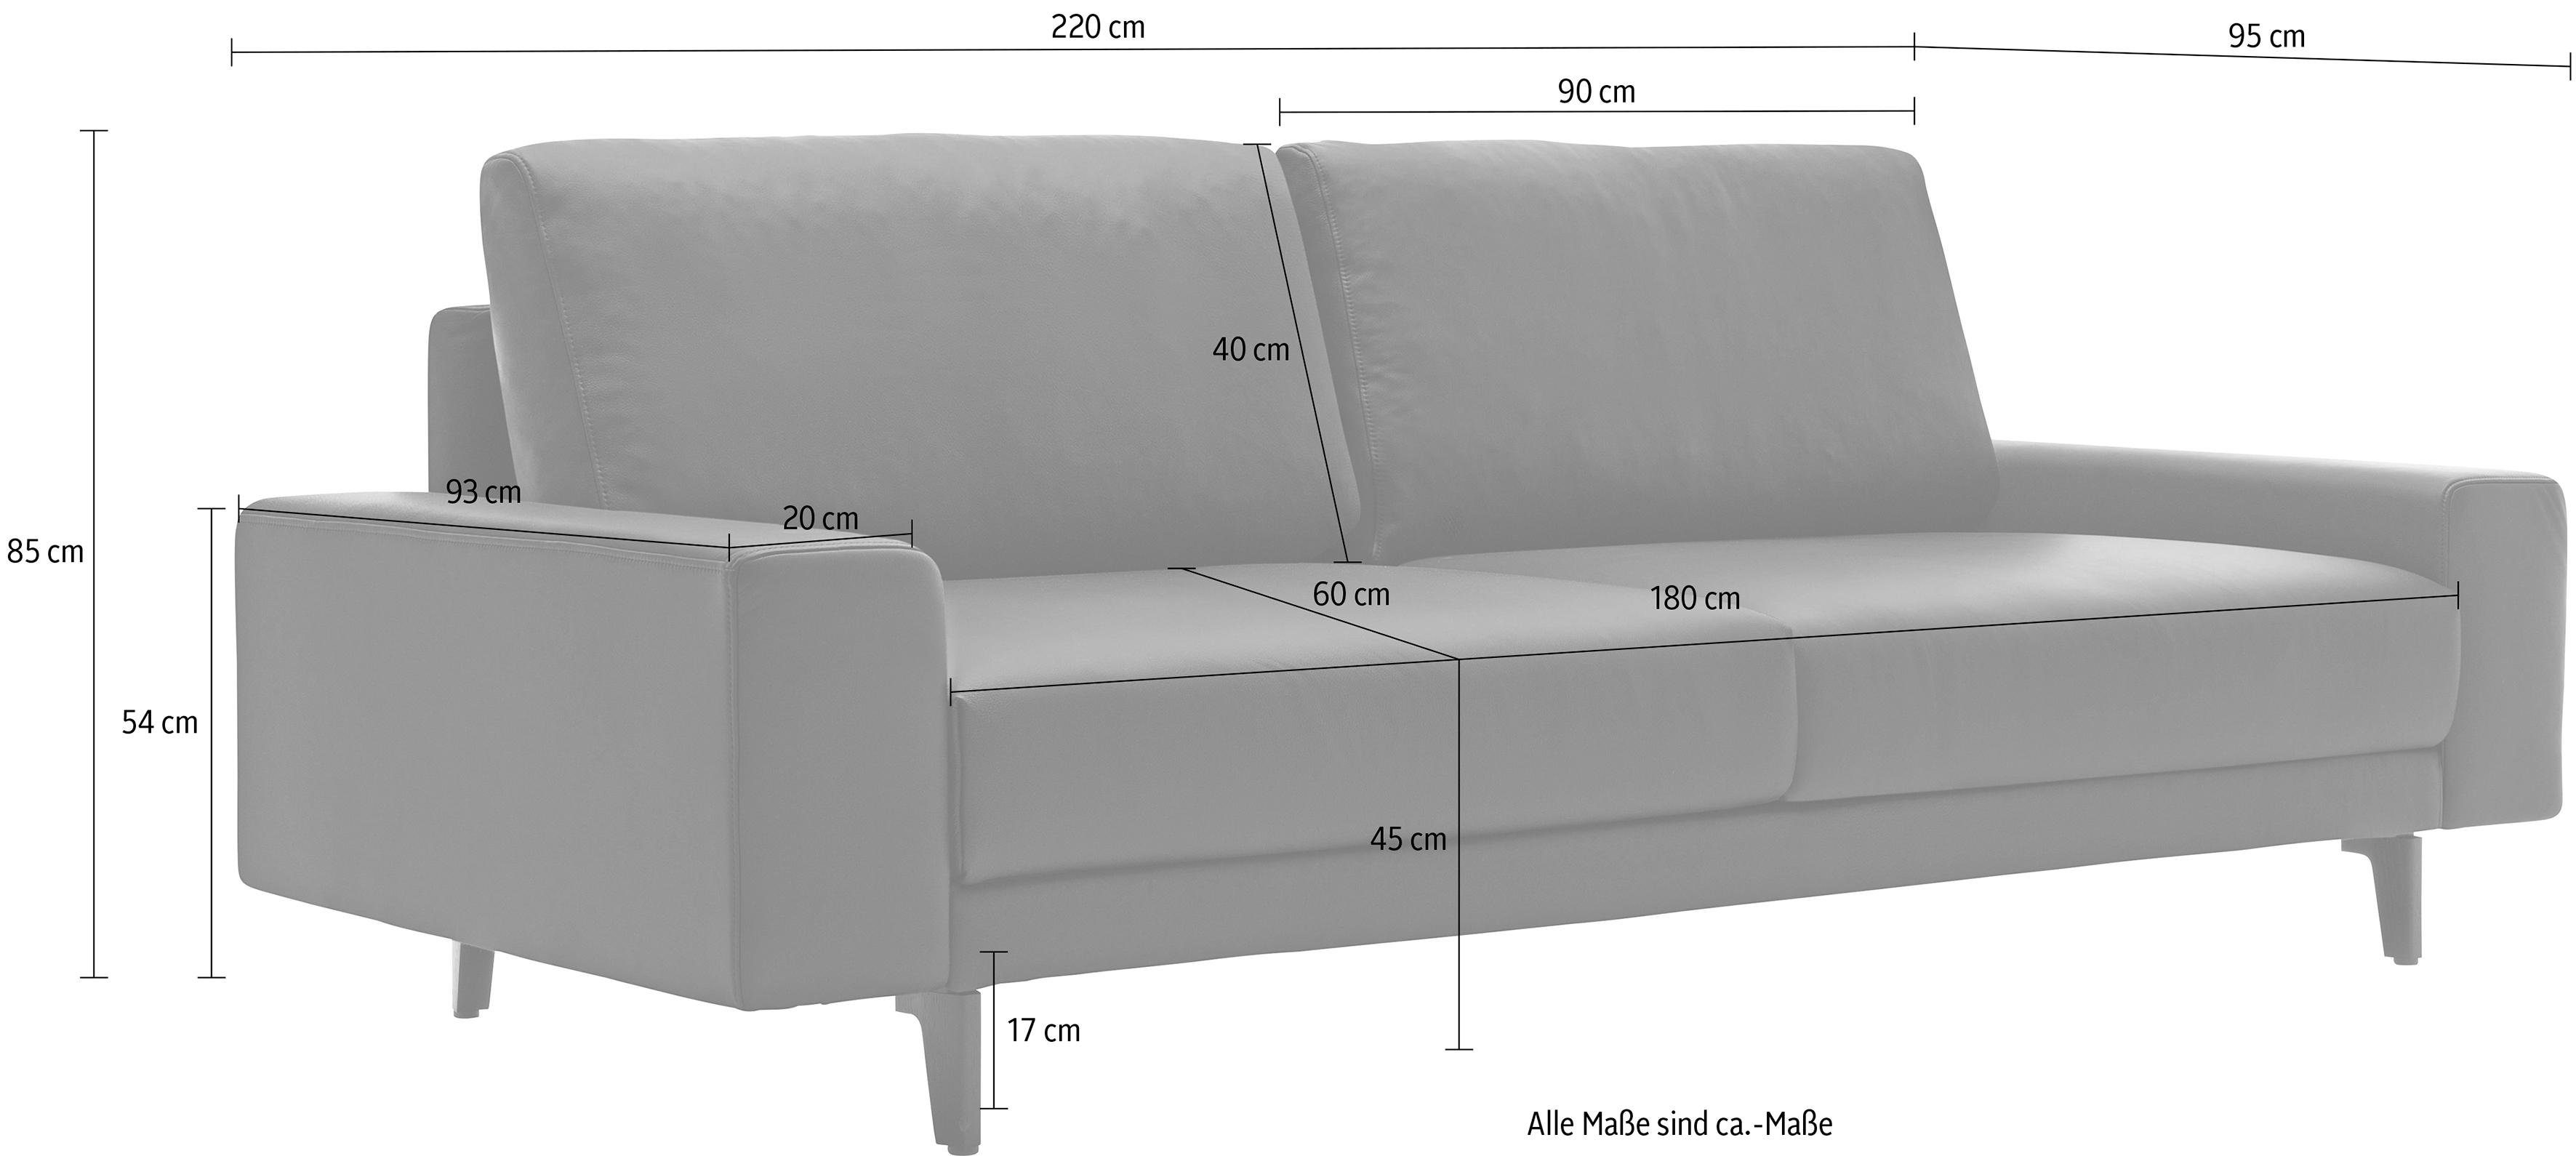 hülsta sofa 220 cm breit hs.450, Armlehne Breite niedrig, umbragrau, Alugussfüße in 3-Sitzer